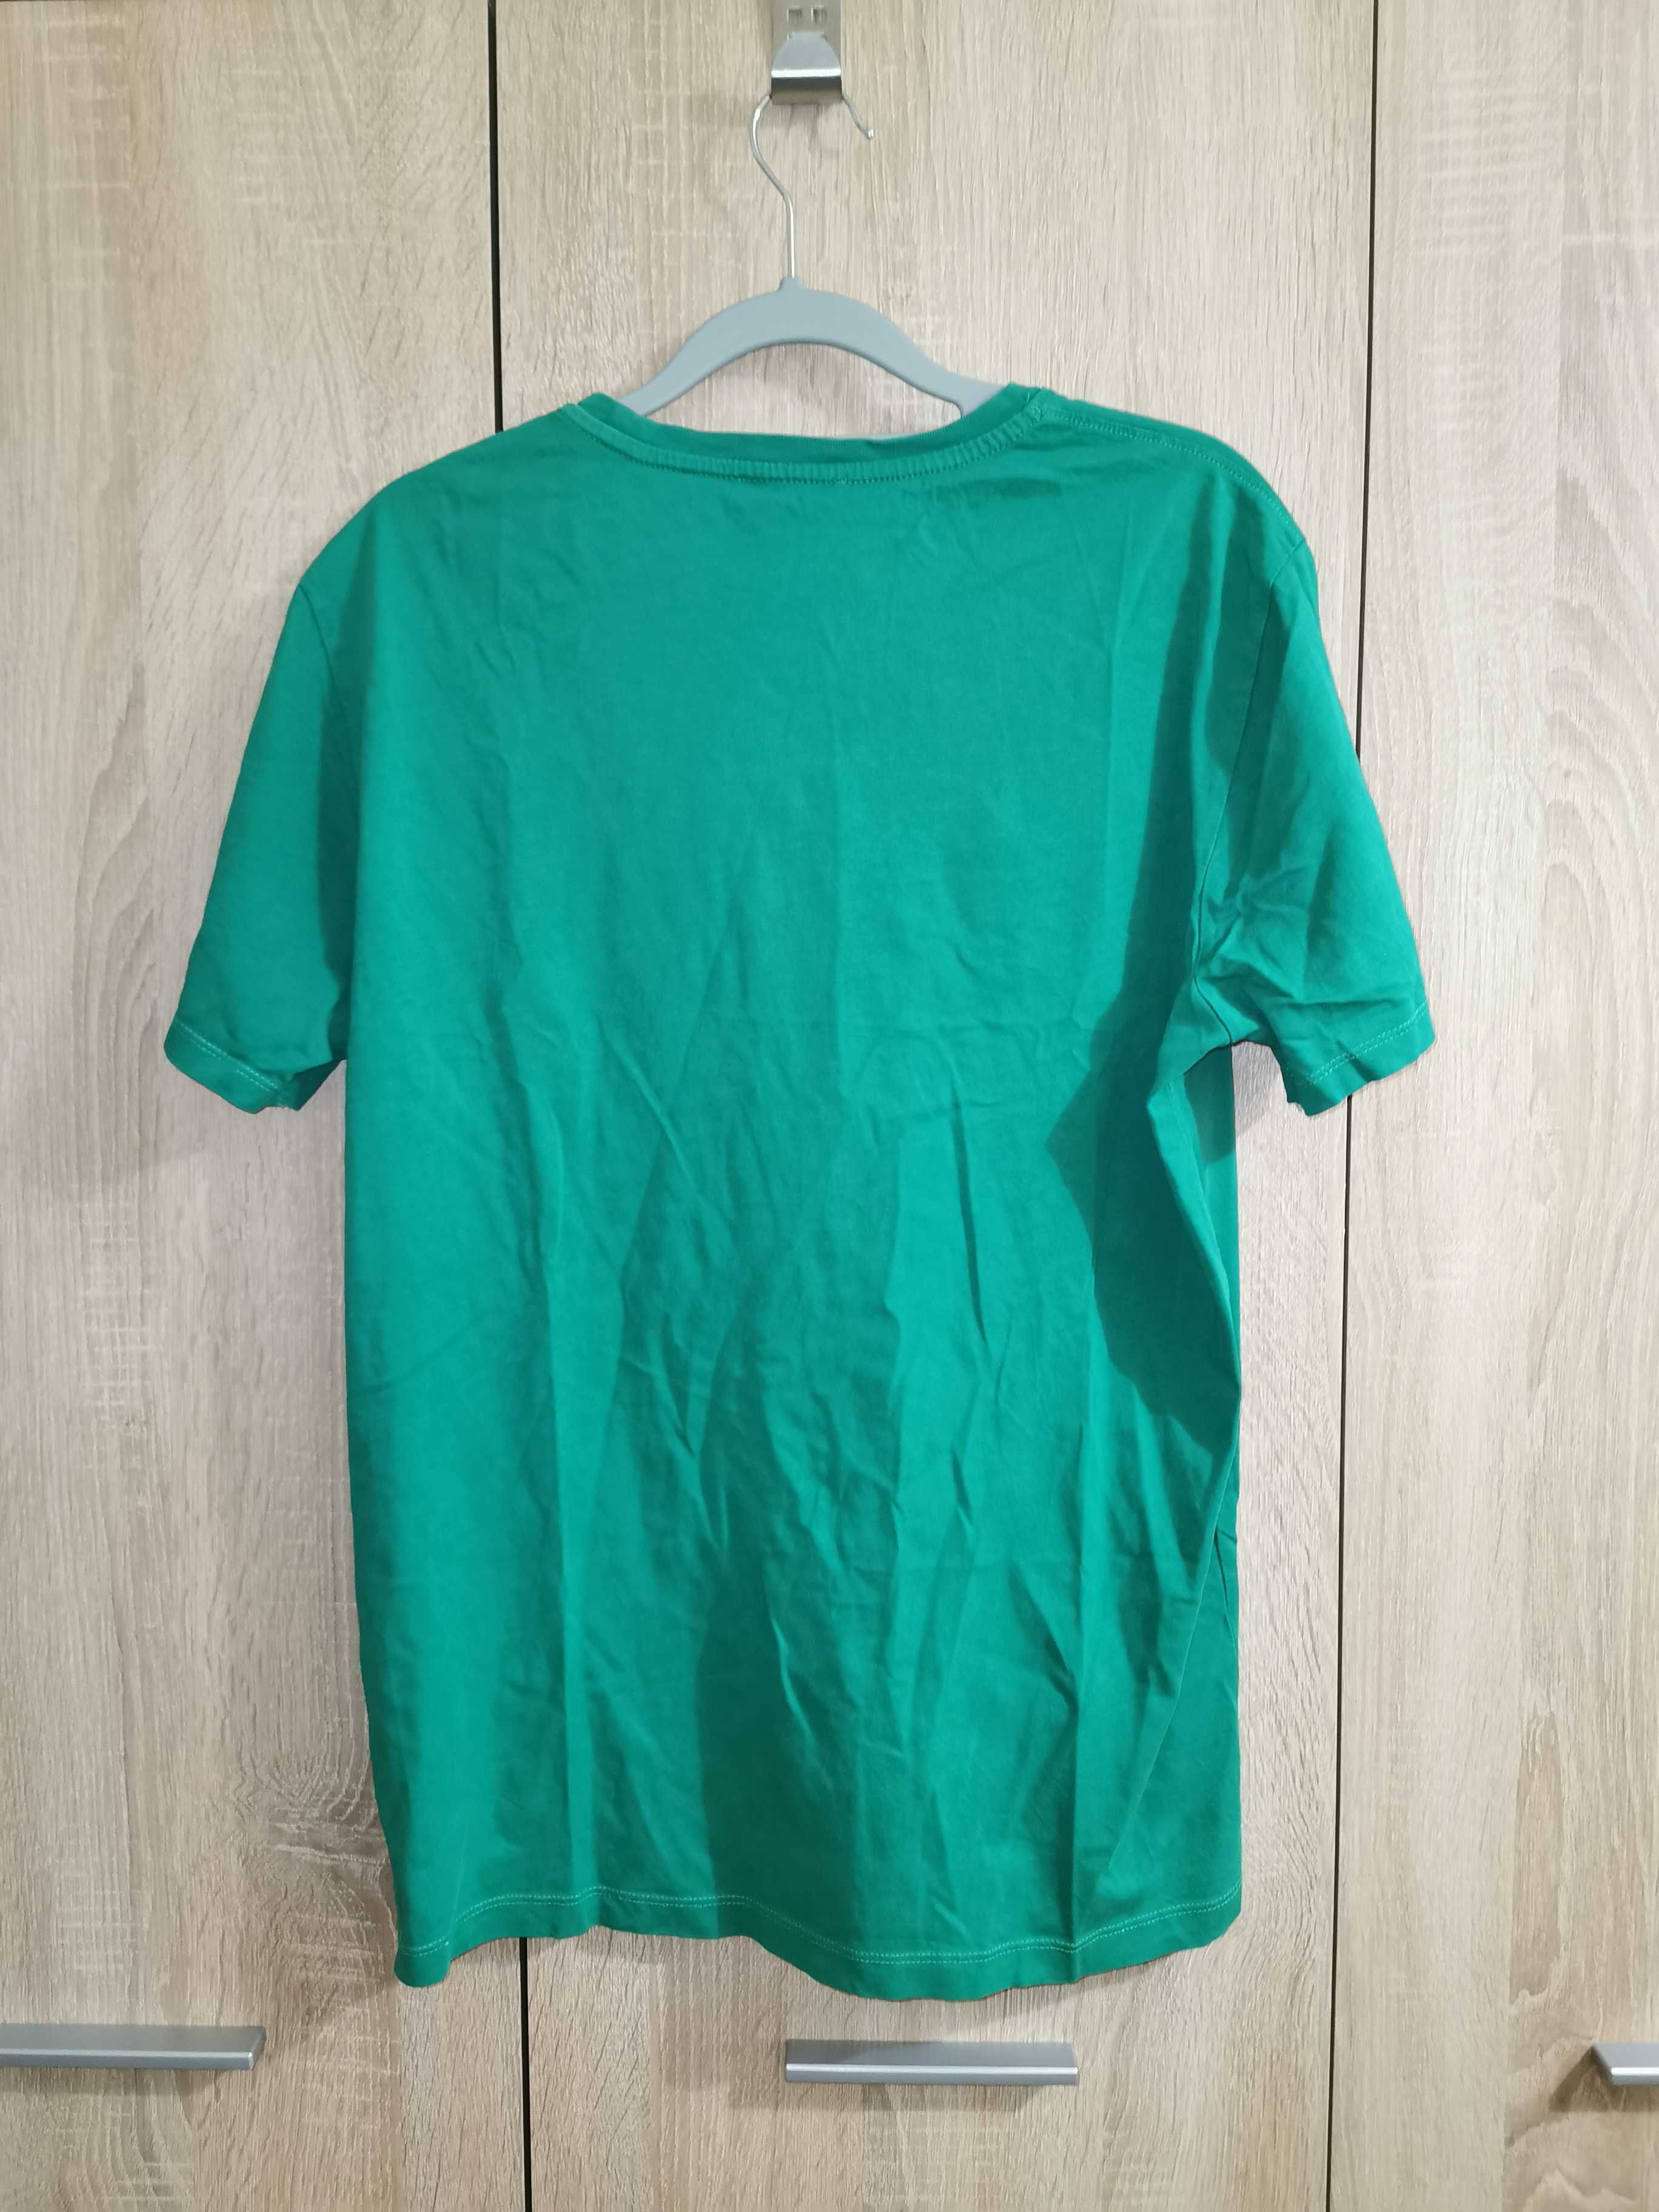 United Color of Benetton - t-shirt zielony - rozmiar L